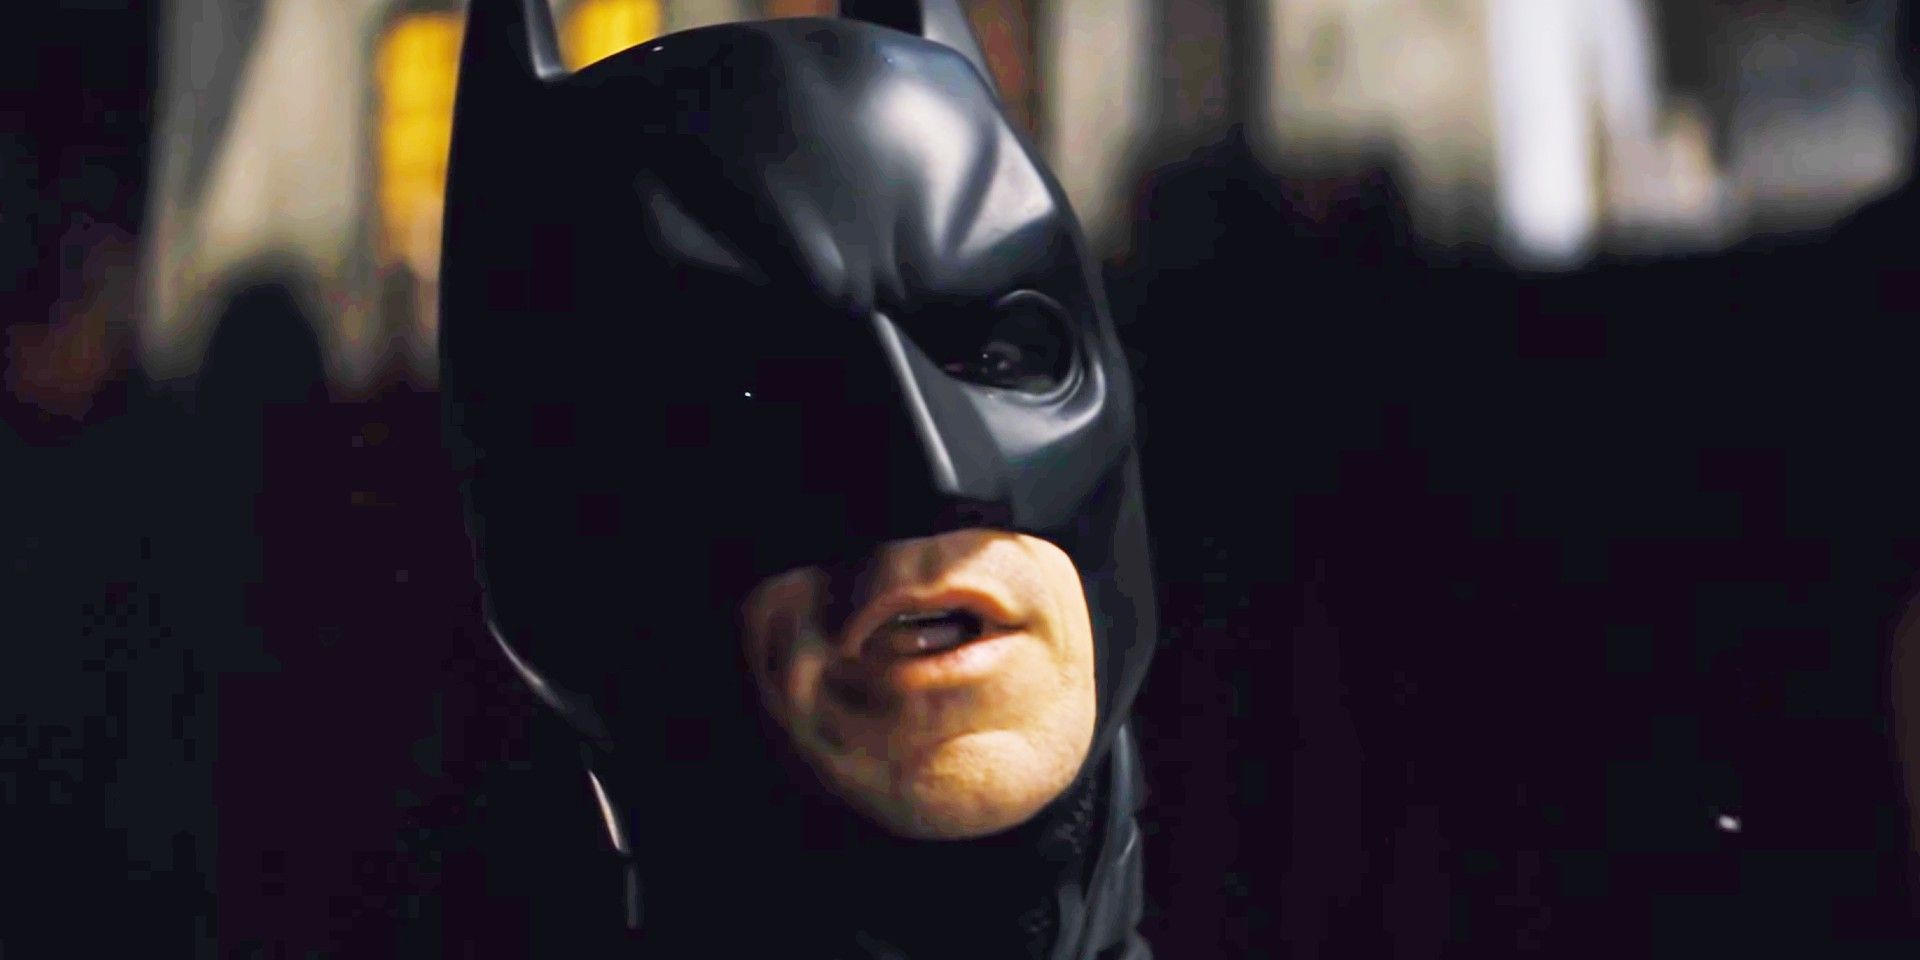 Christian Bale as Batman in Dark Knight